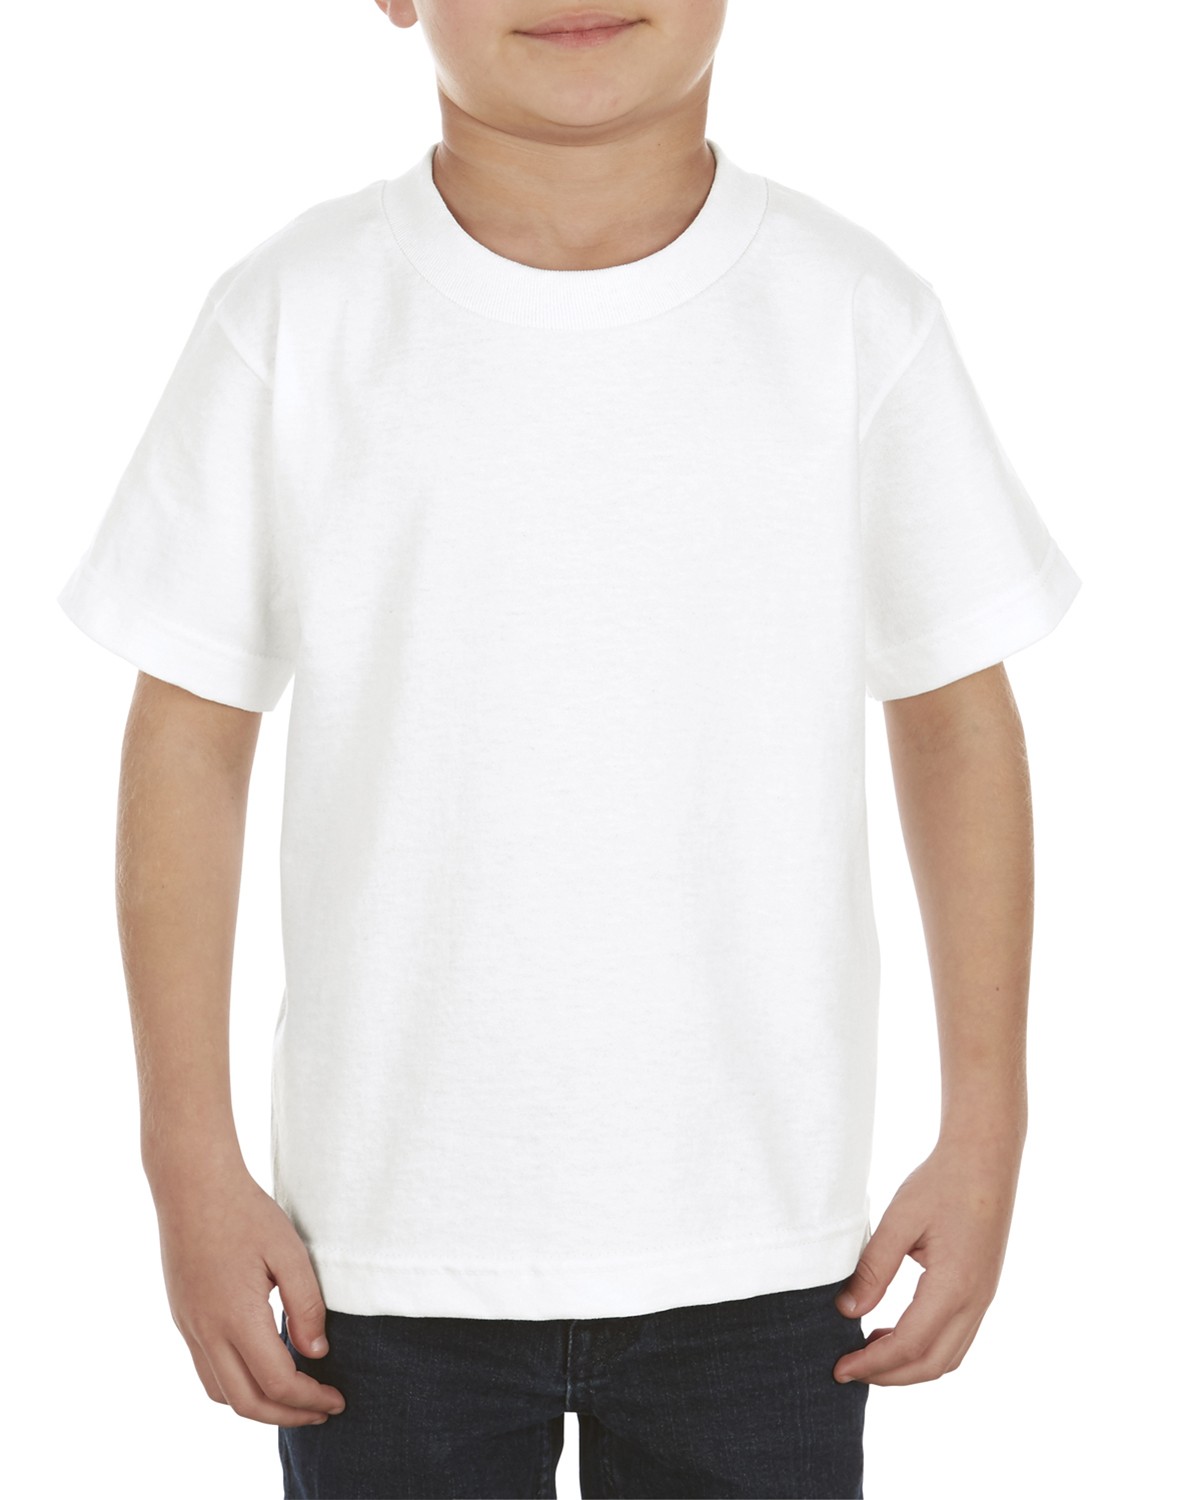 Alstyle AL3383 Toddler Juvy 6.0 oz.; 100% Cotton T-Shirt